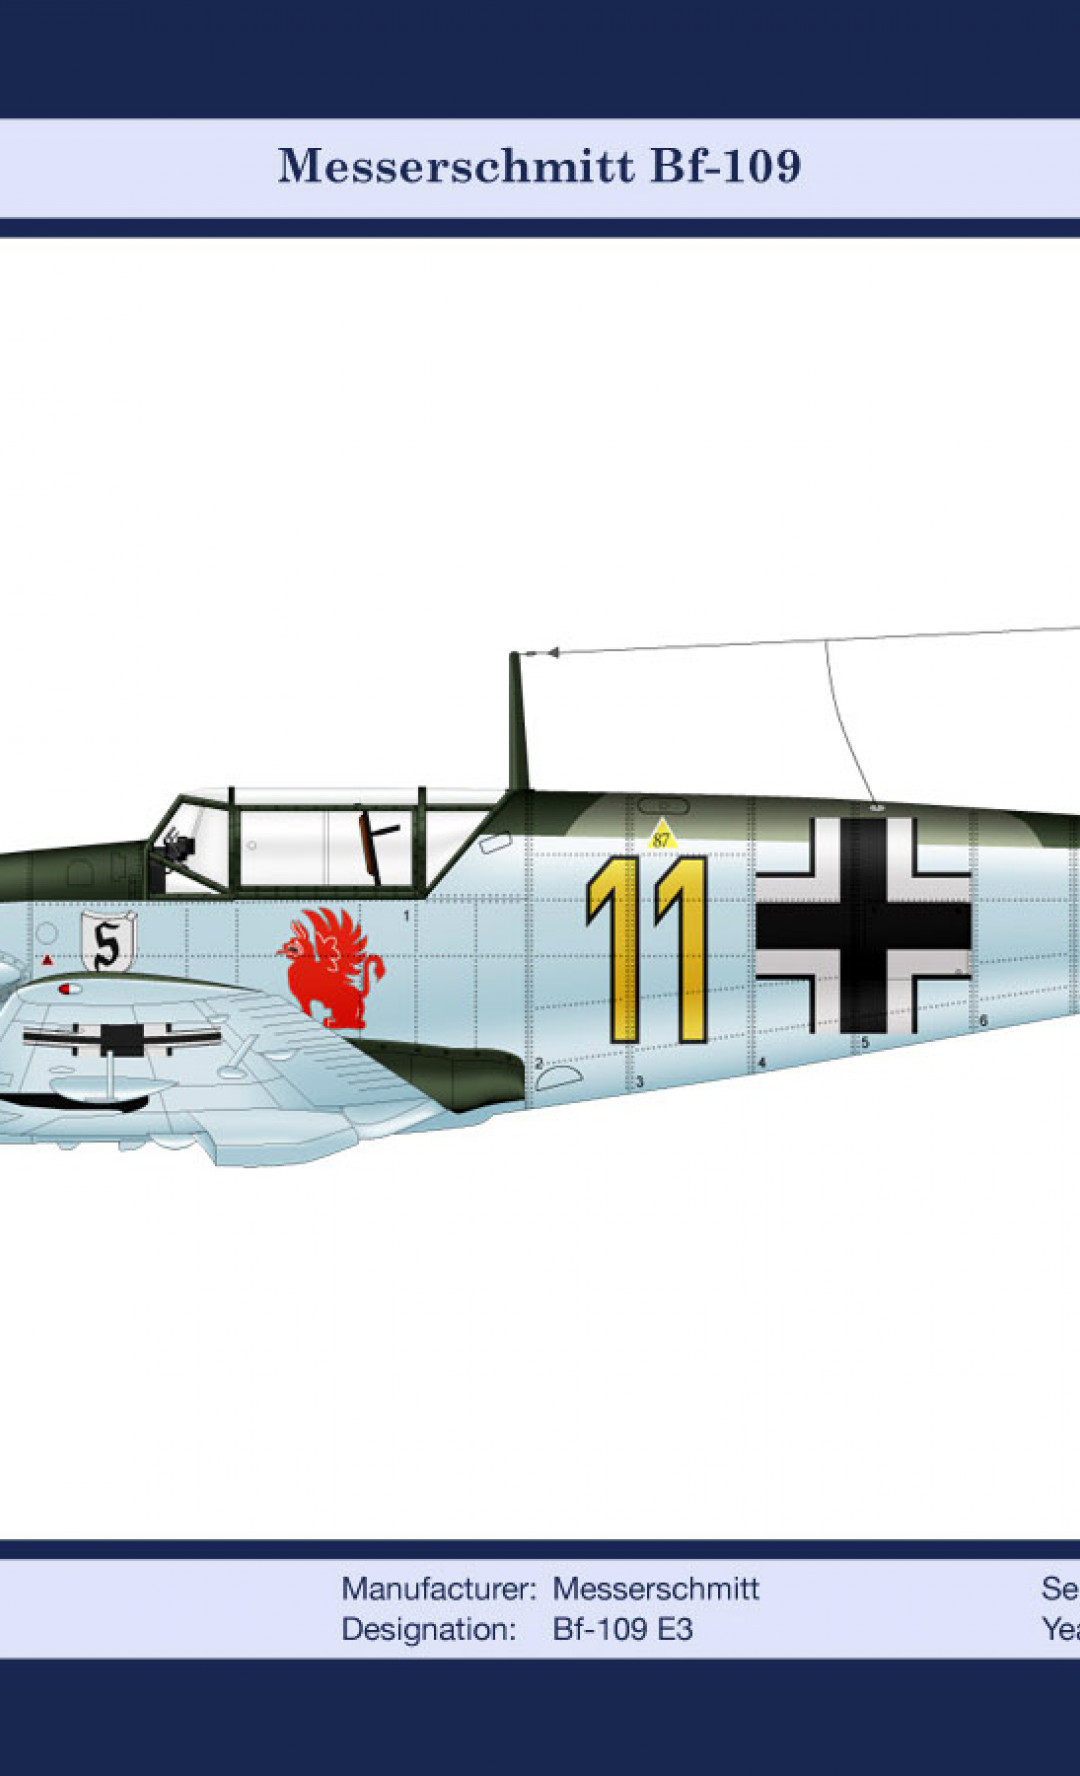 modele-samolotow (48).jpg